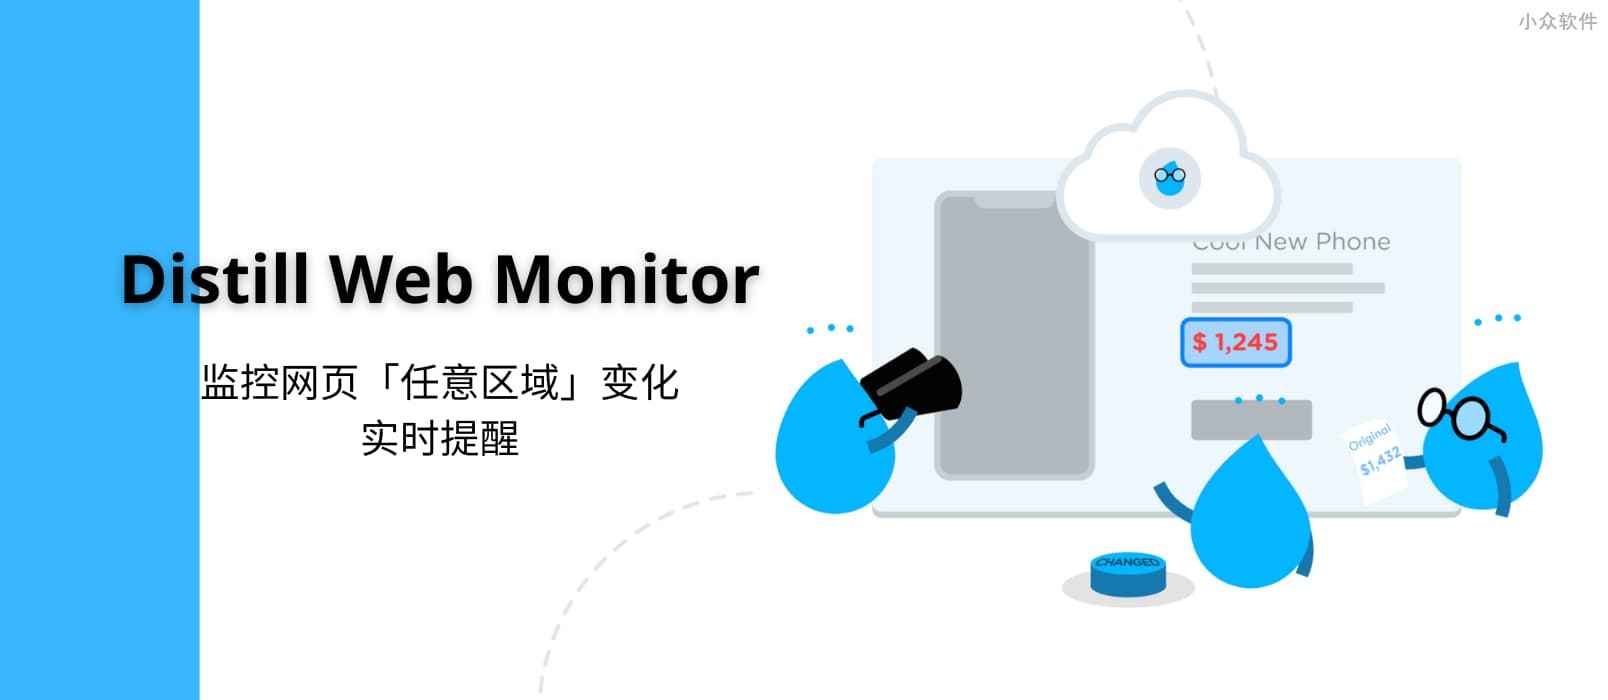 Distill Web Monitor – 监控网页「任意区域」变化，实时提醒